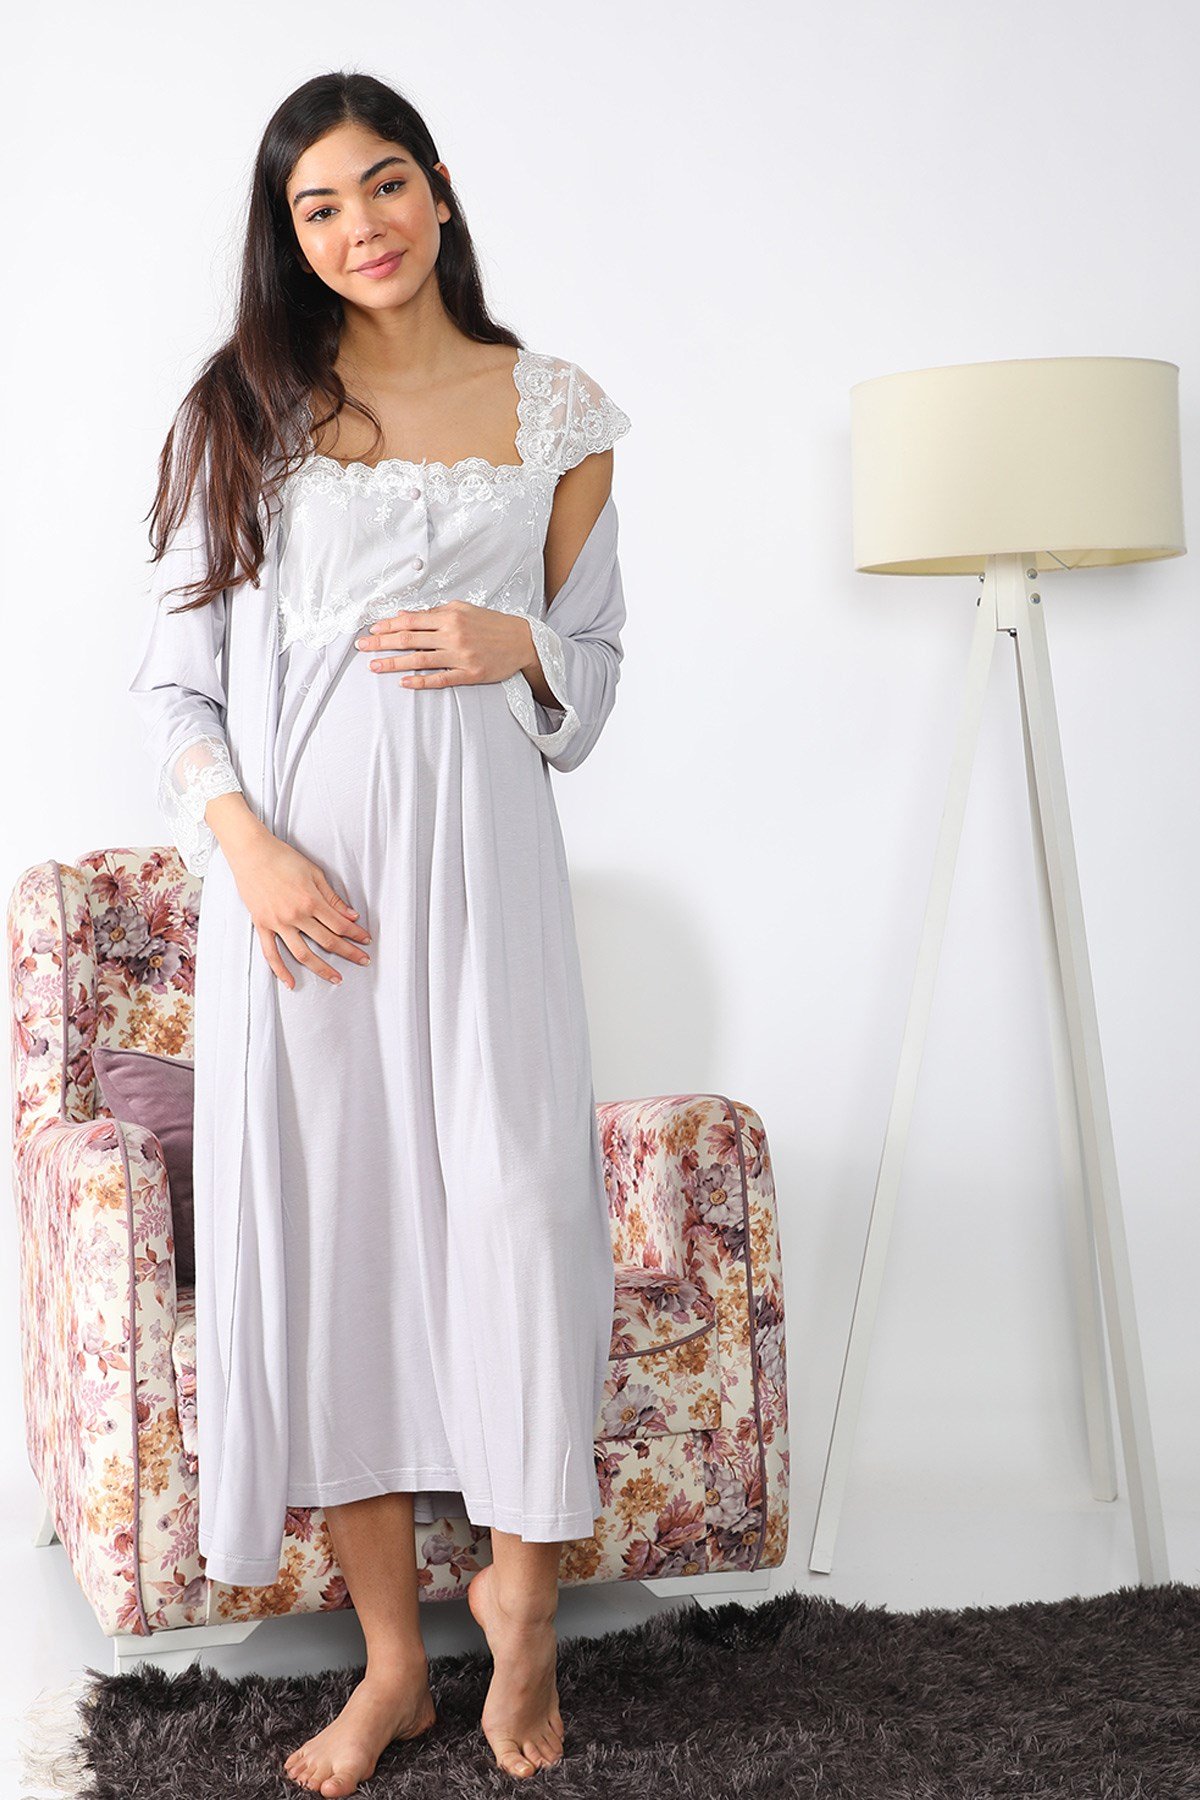 Nurture by Lamaze Women's Maternity Nursing Robe Set with Swaddle 